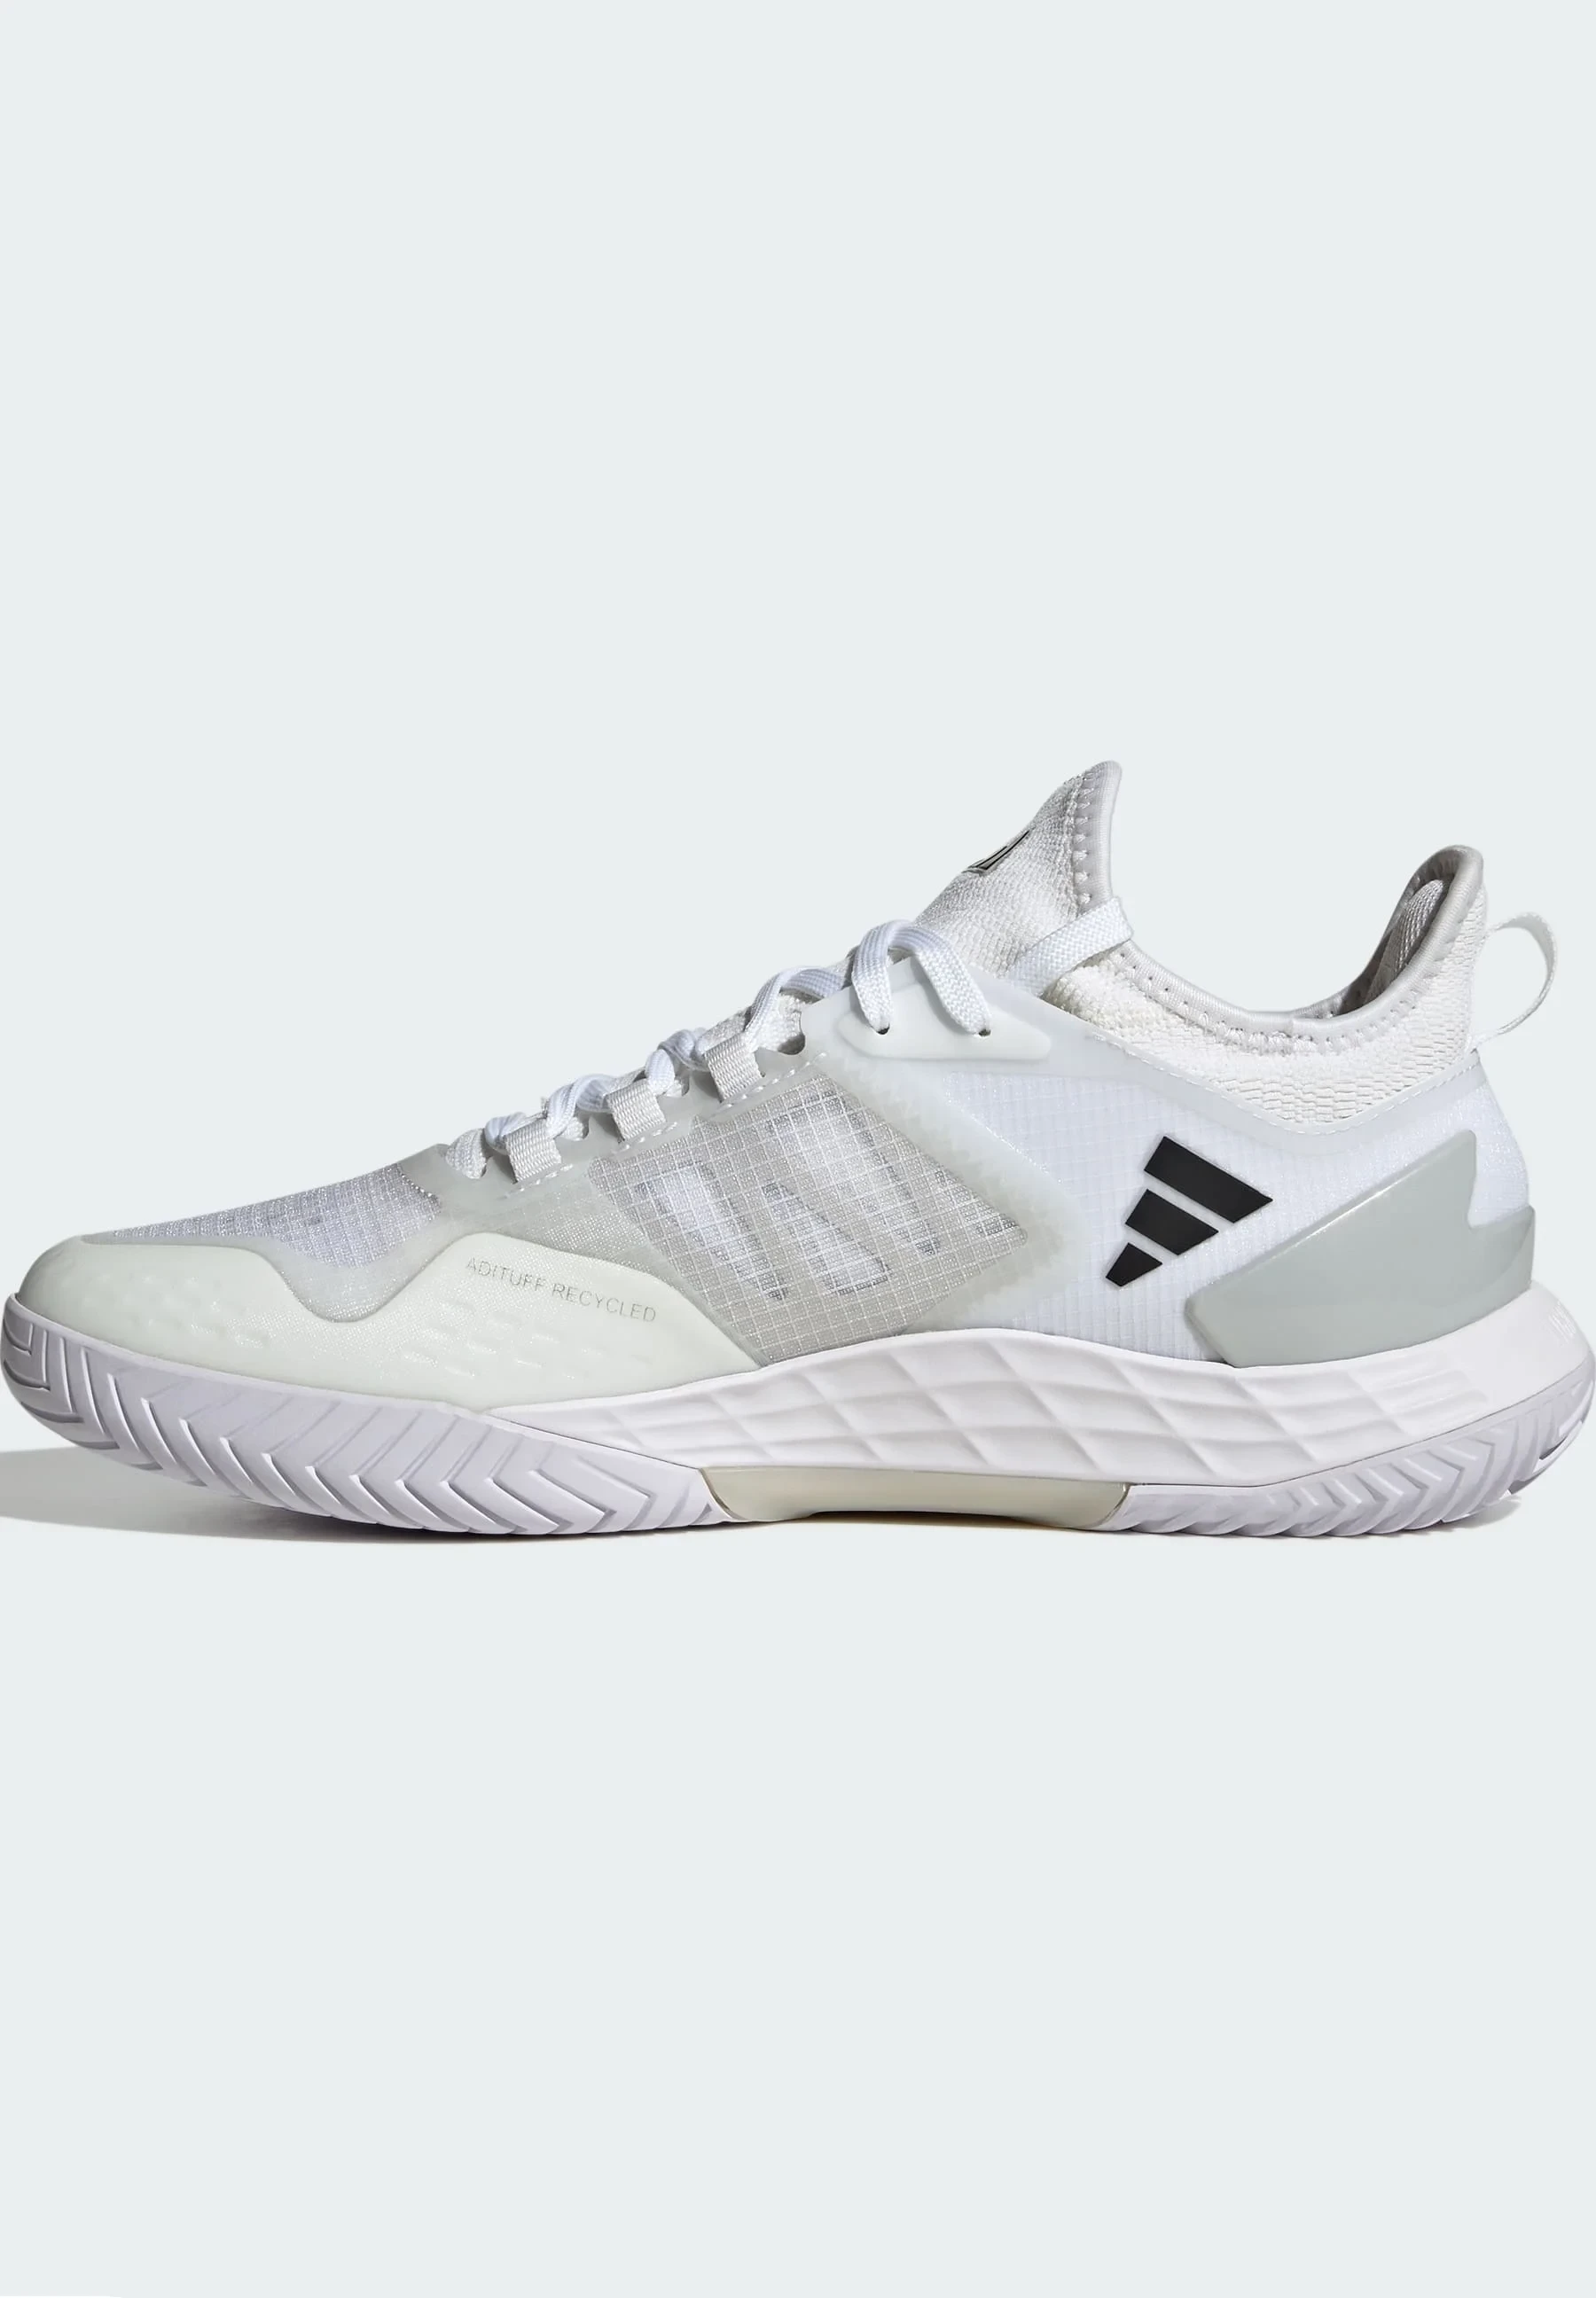 Adidas Adizero Ubersonic 4.1 CL M bianco